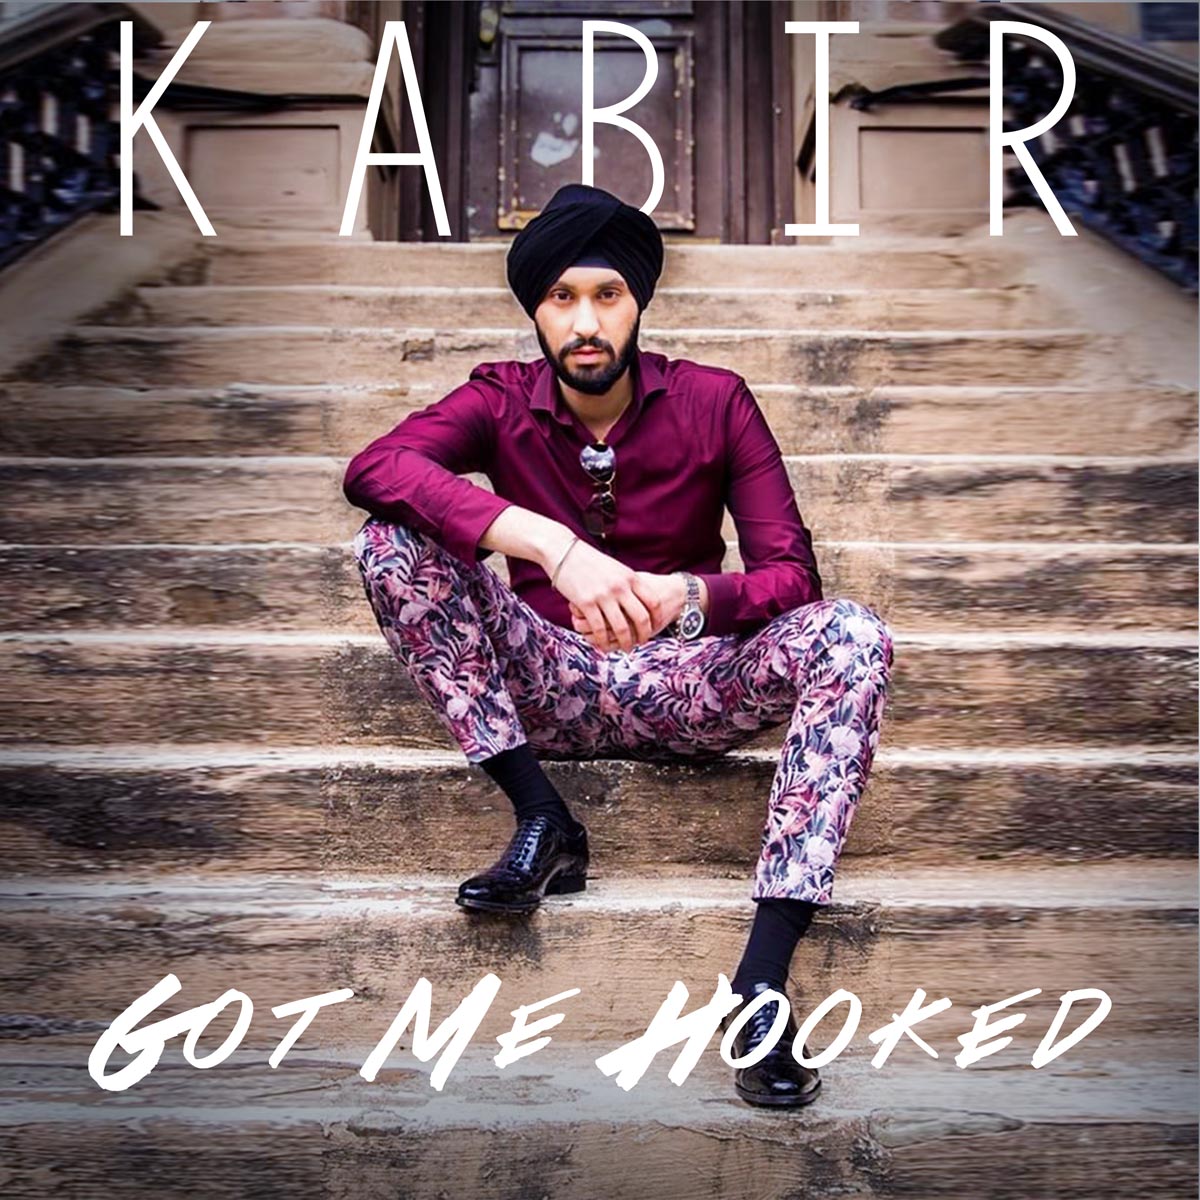 Singer Kabir - Single Cover Pic